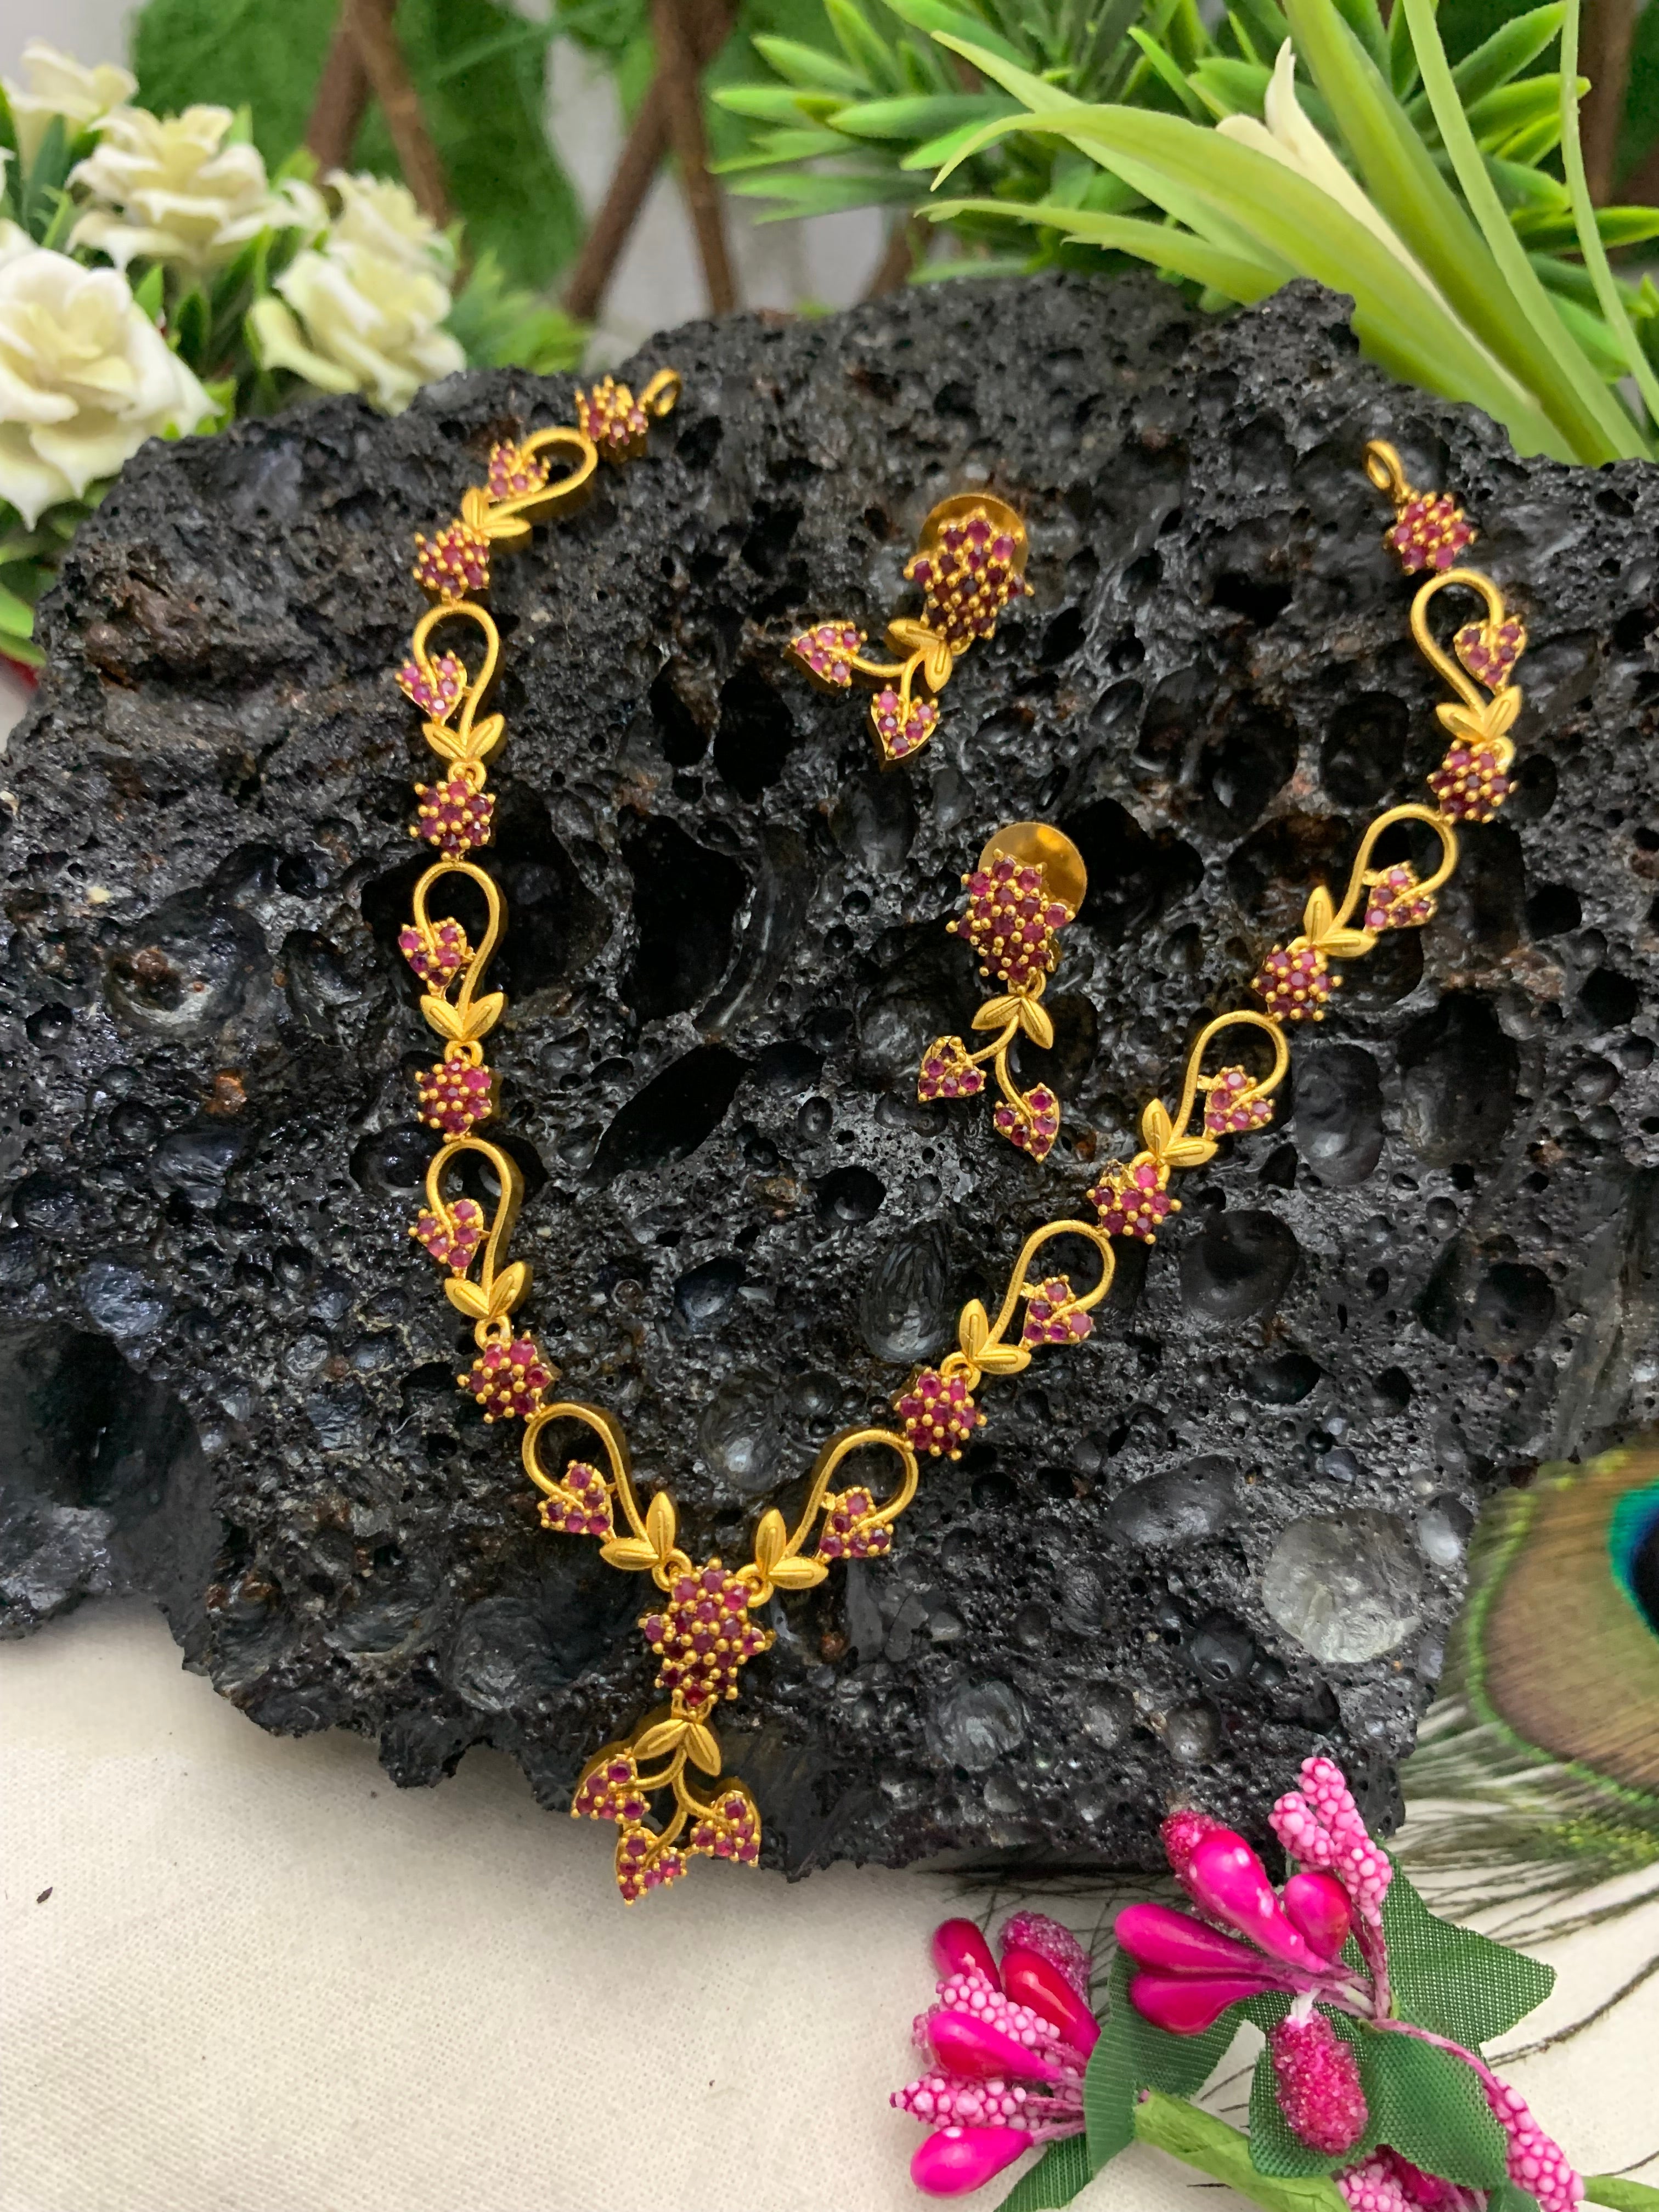 Gold finish Floral pattern cz /Ruby stone necklace set 9412N